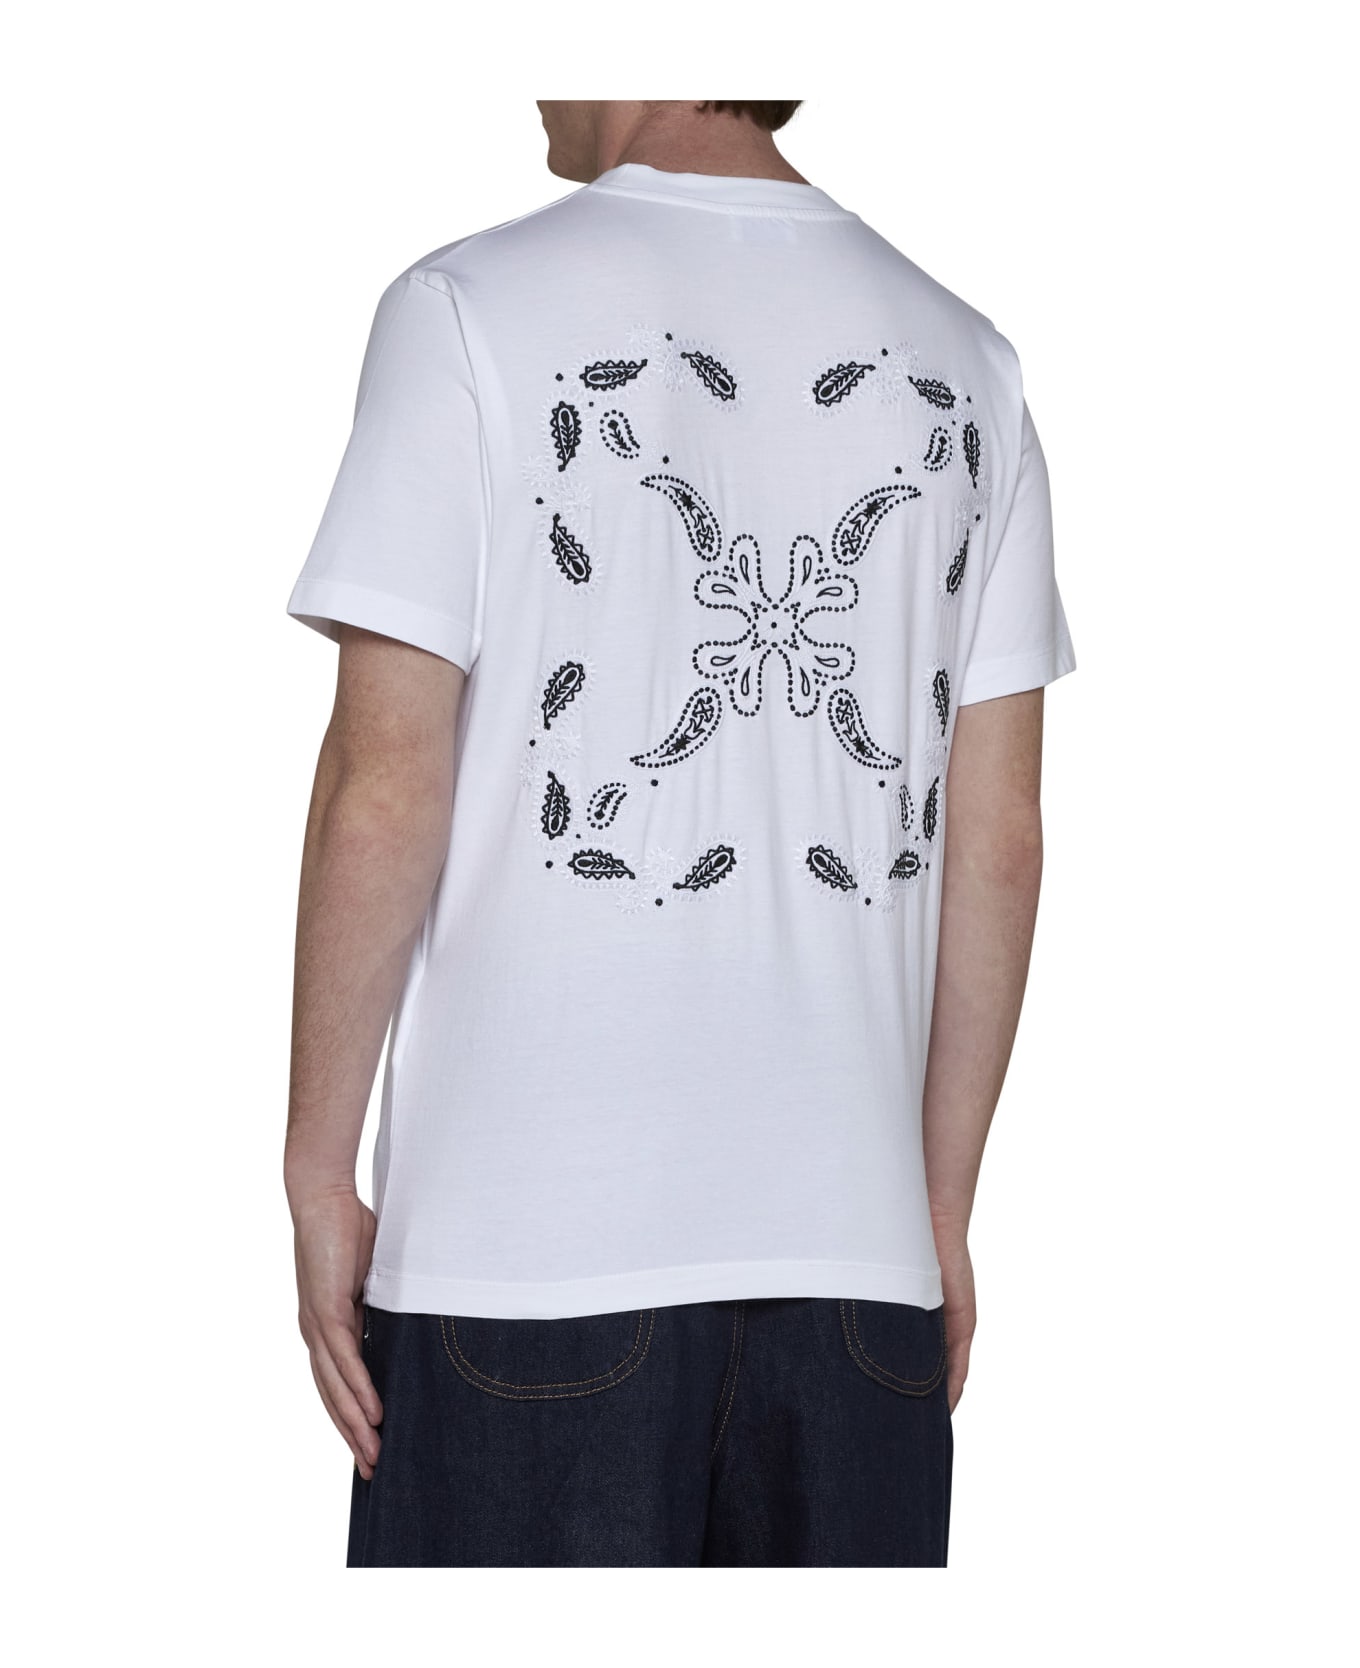 Off-White Off White Logo Printed Crewneck T-shirt - White Black シャツ